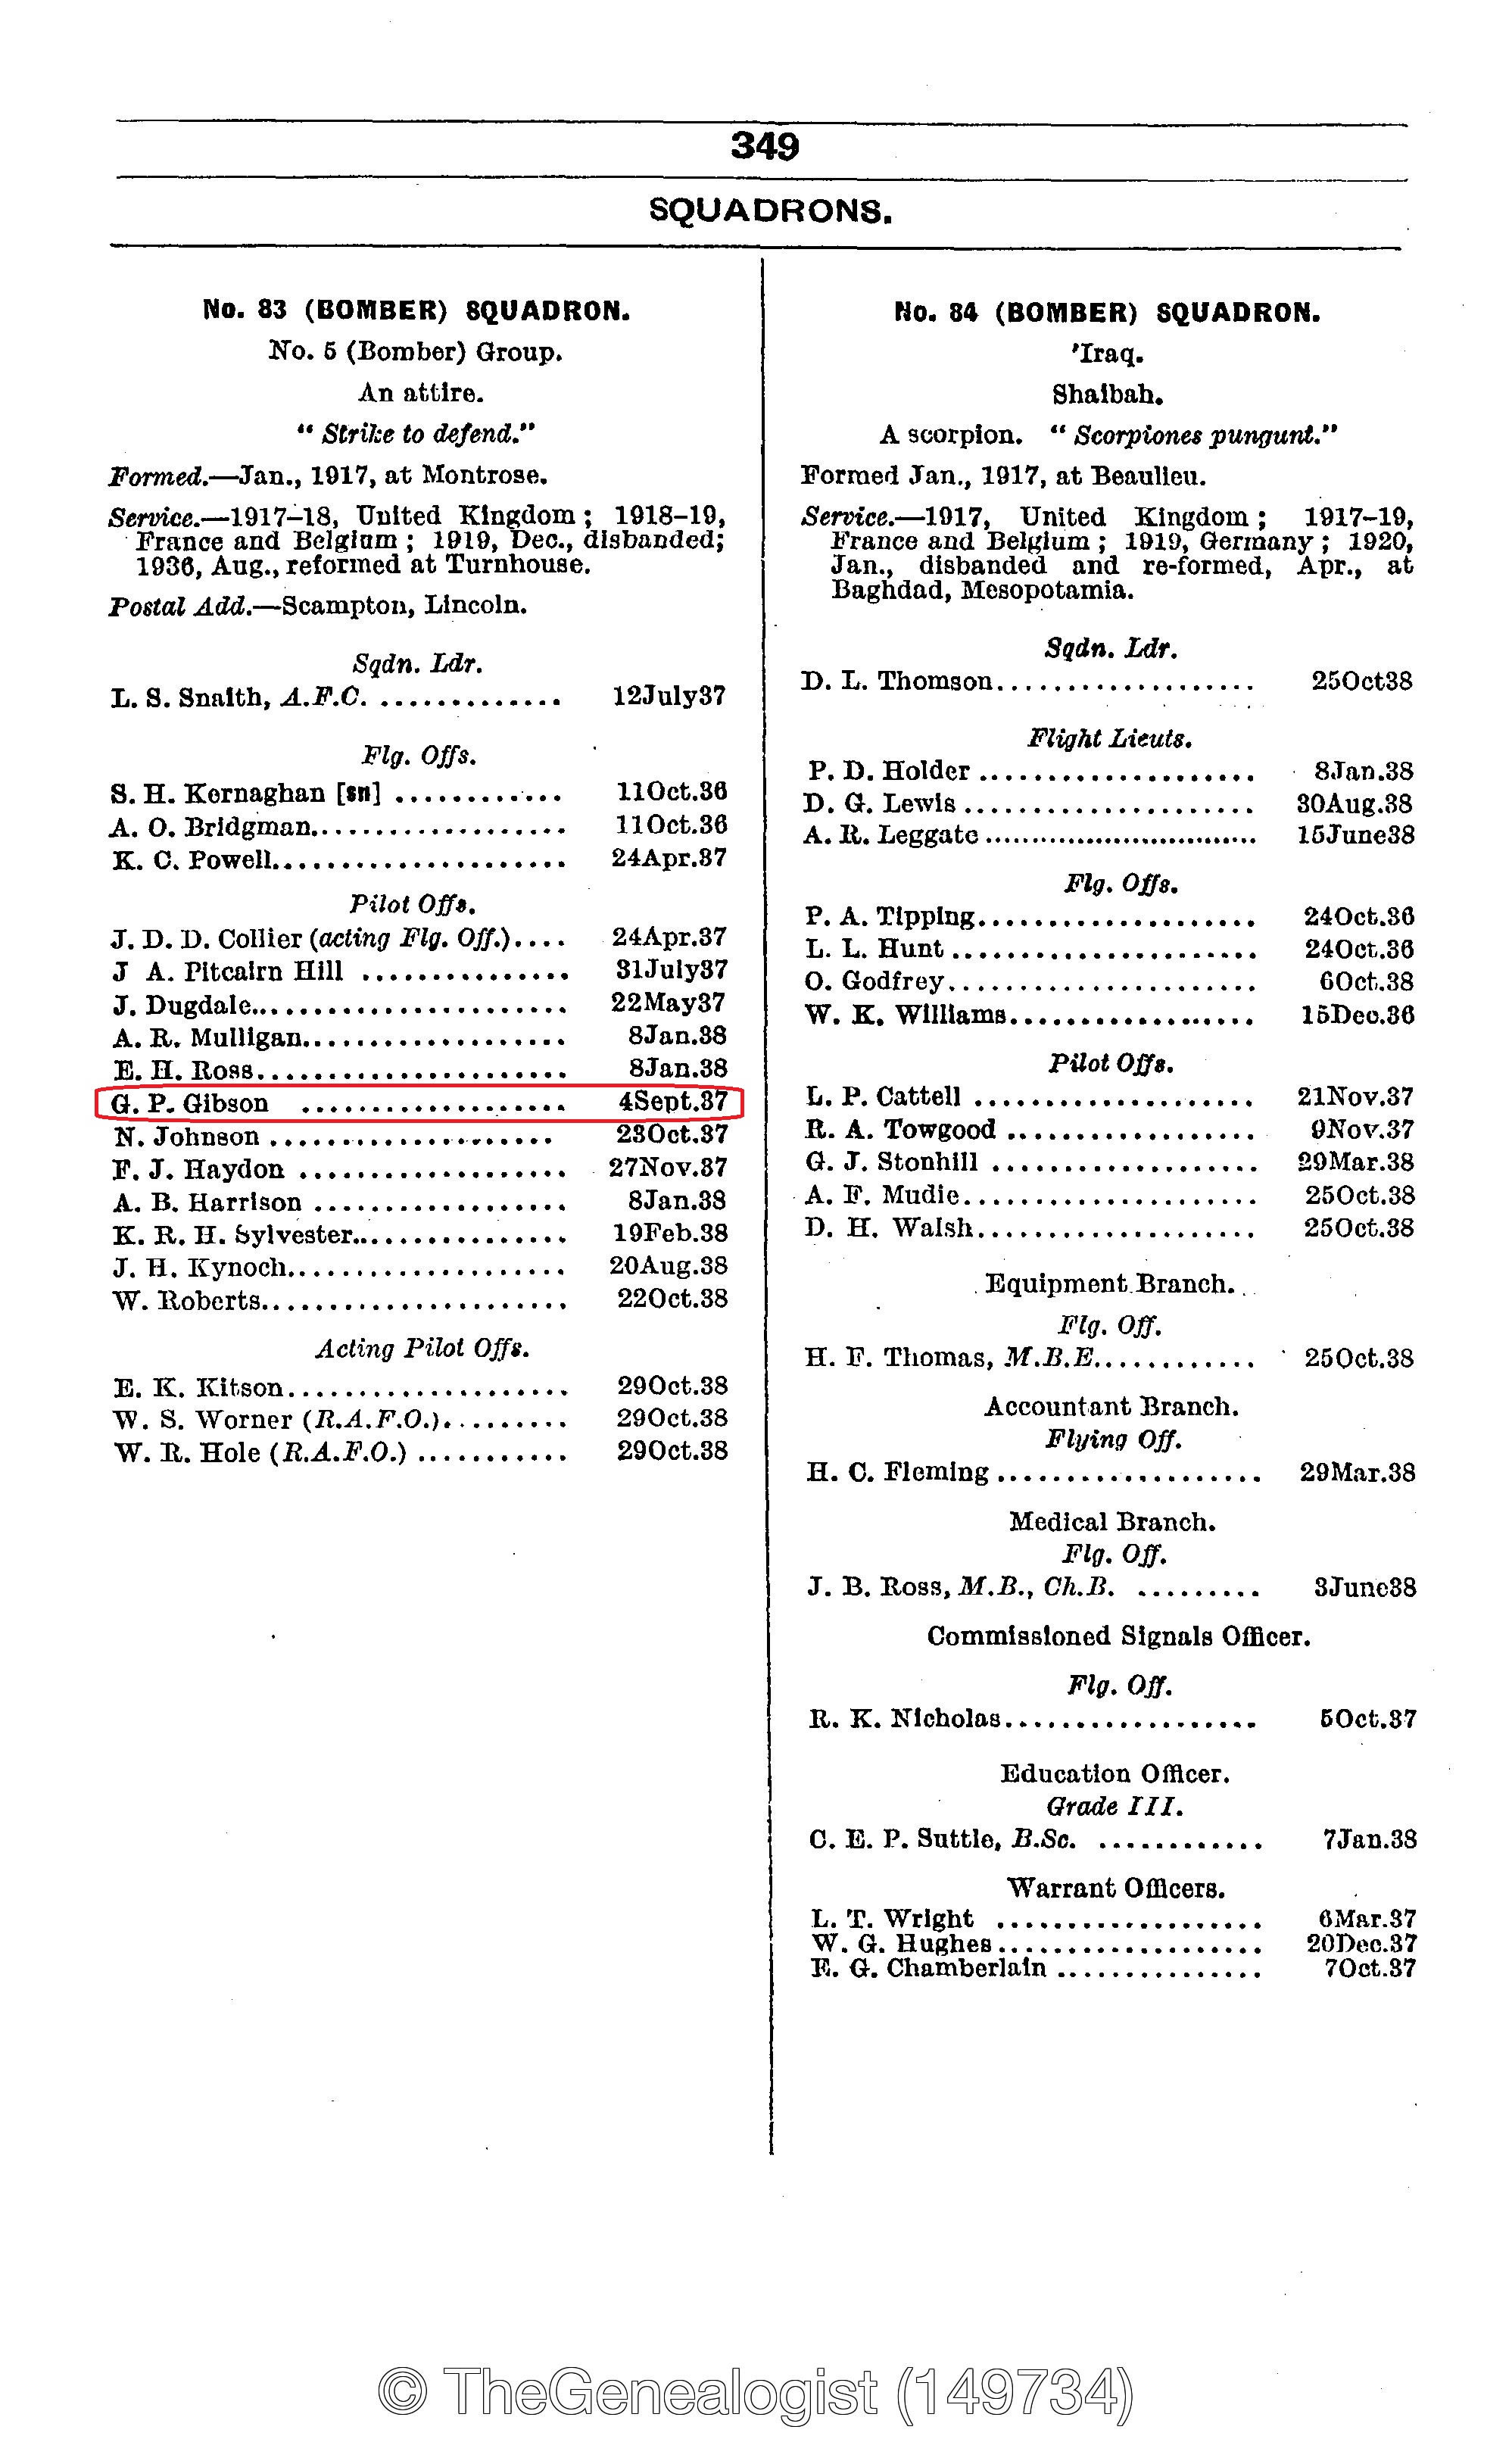 1939 Air Force List on TheGenealogist